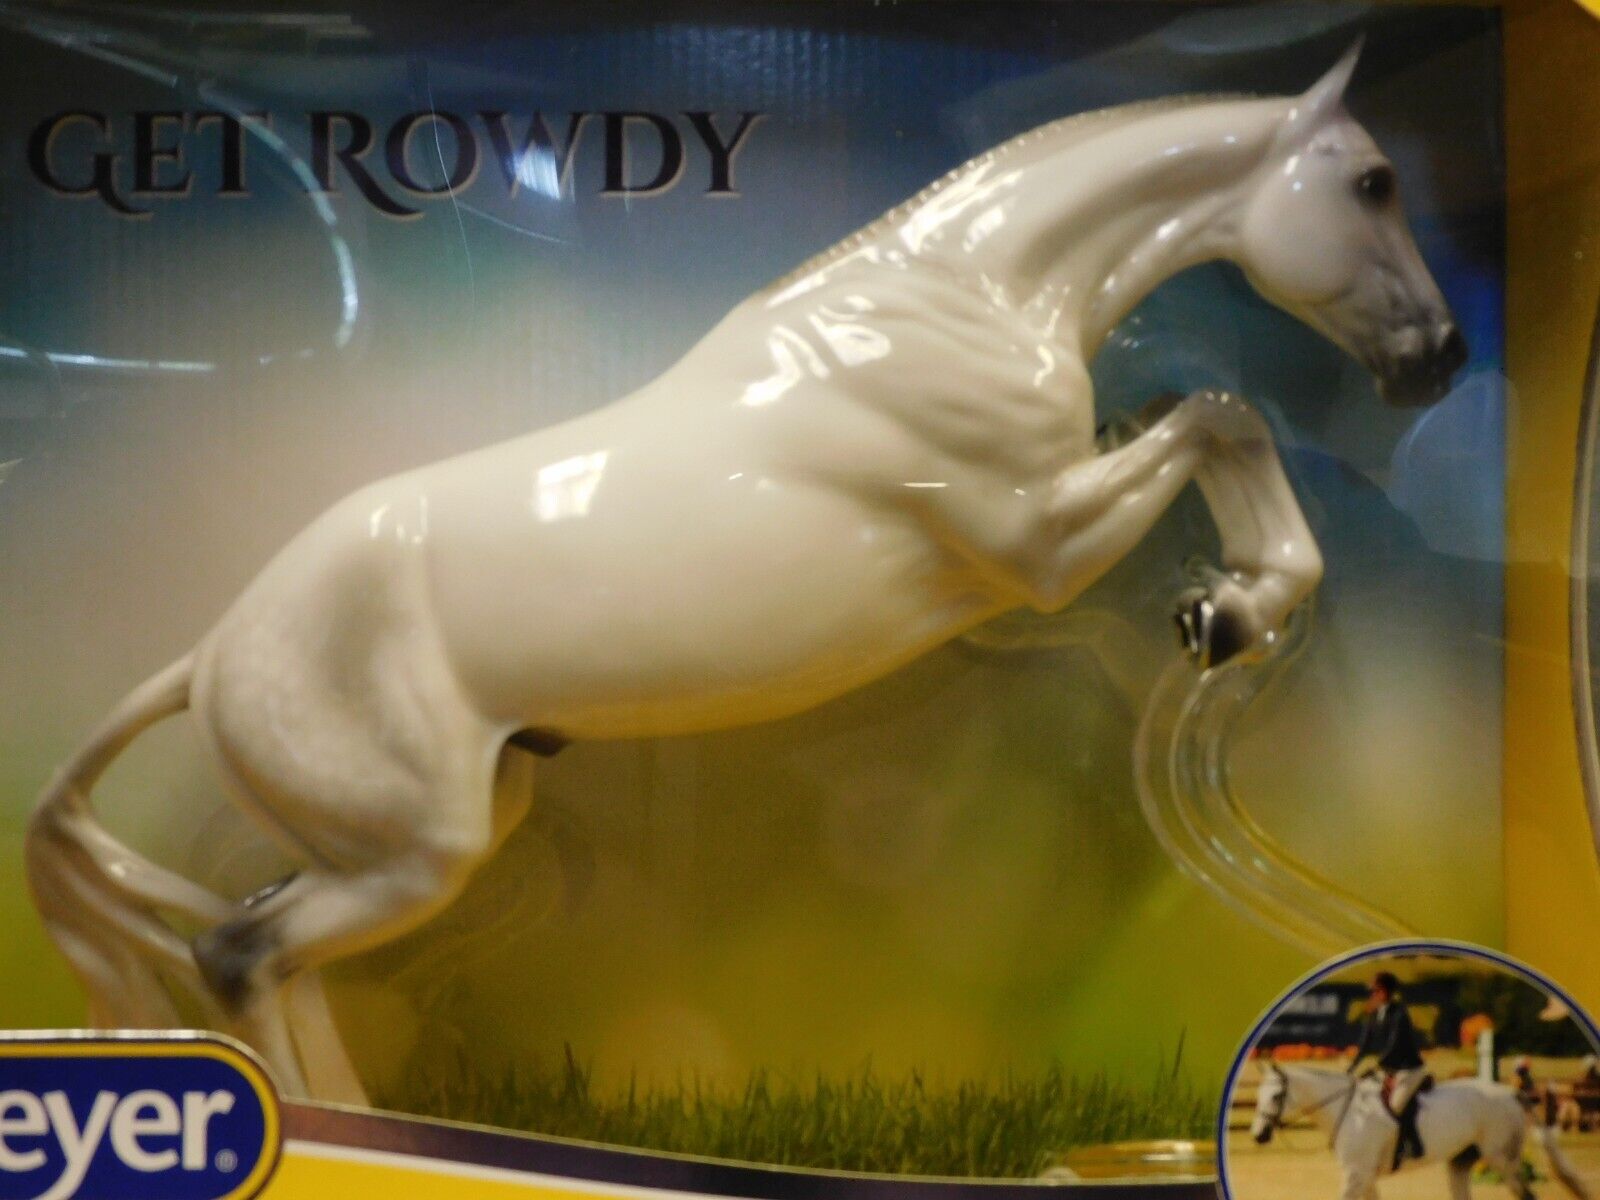 Breyer * Glossy Get Rowdy * CCA Bristol Traditional Model Horse